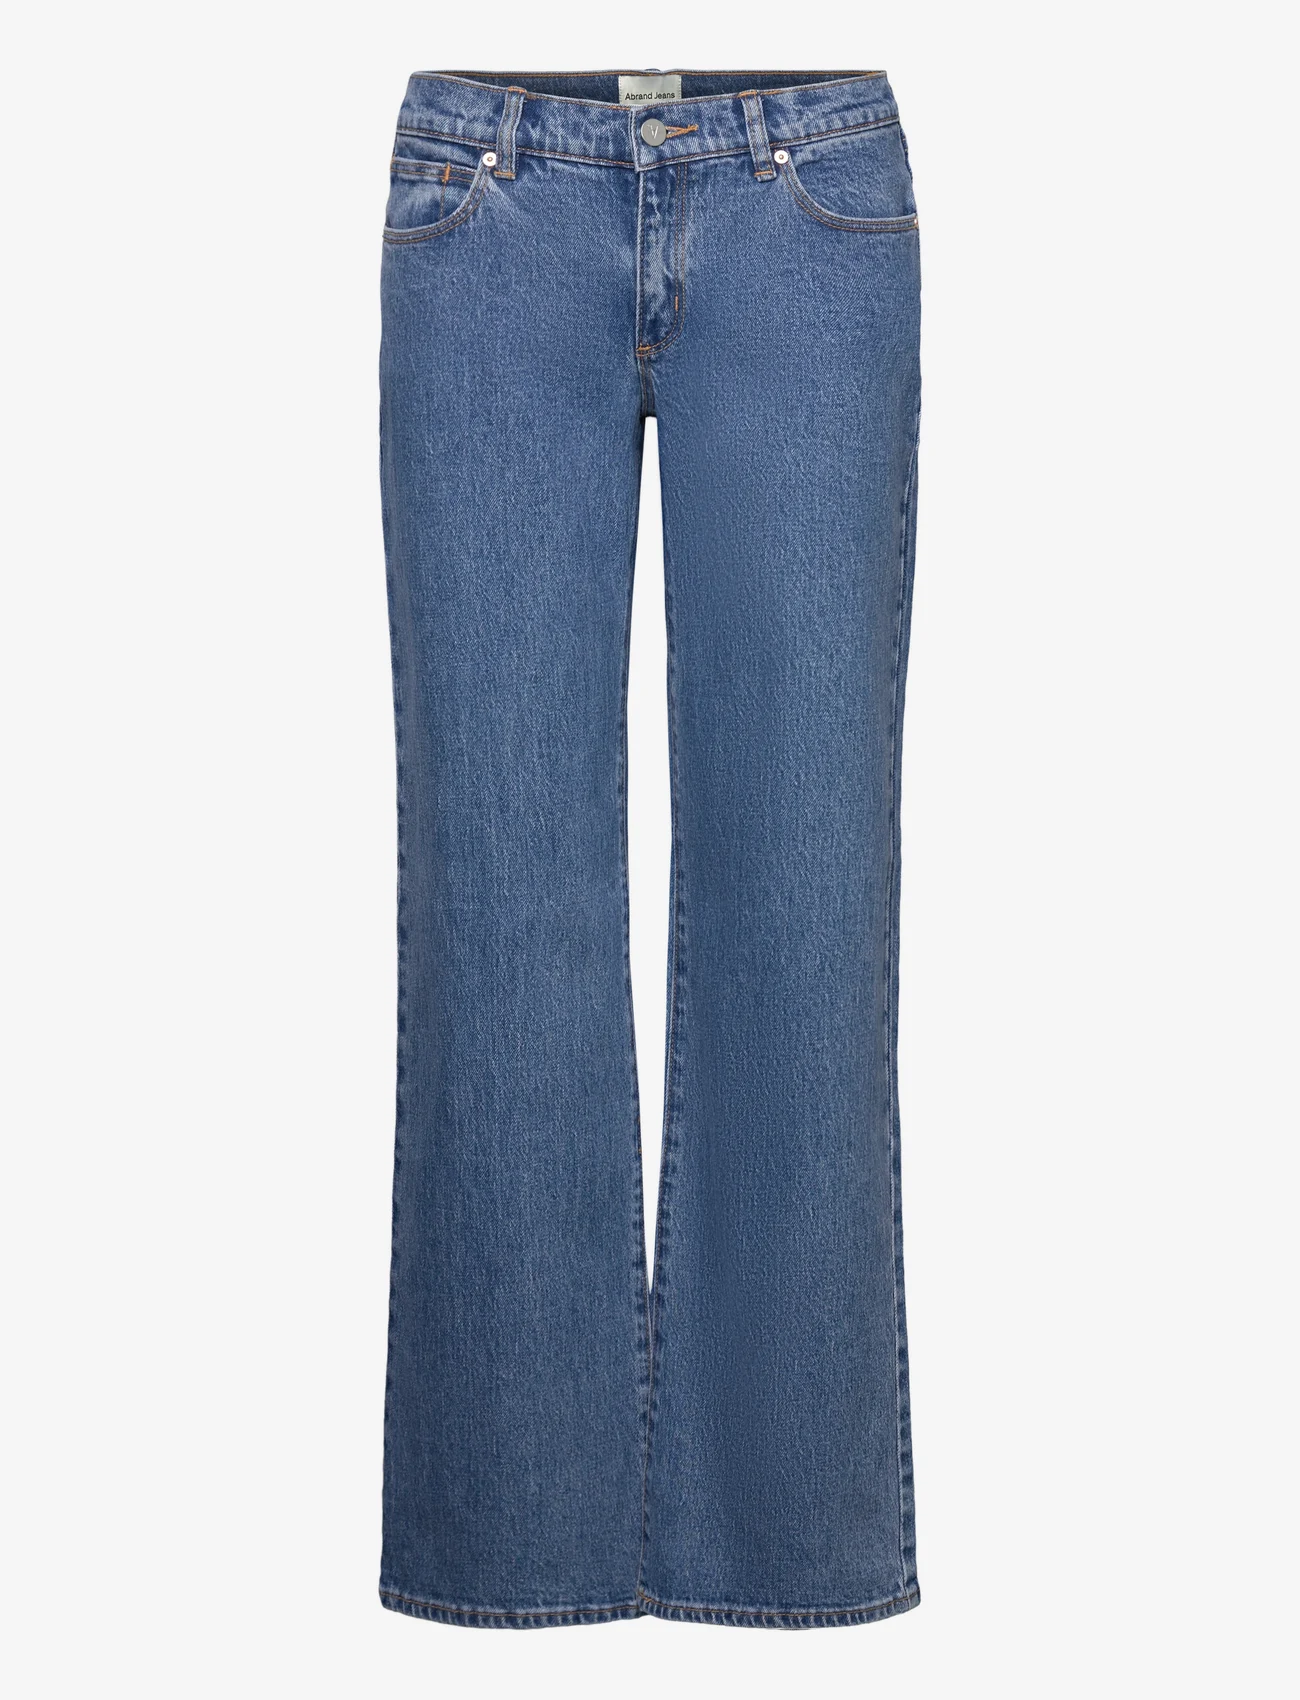 ABRAND - A 99 LOW & WIDE DENISE - vida jeans - blue - 0